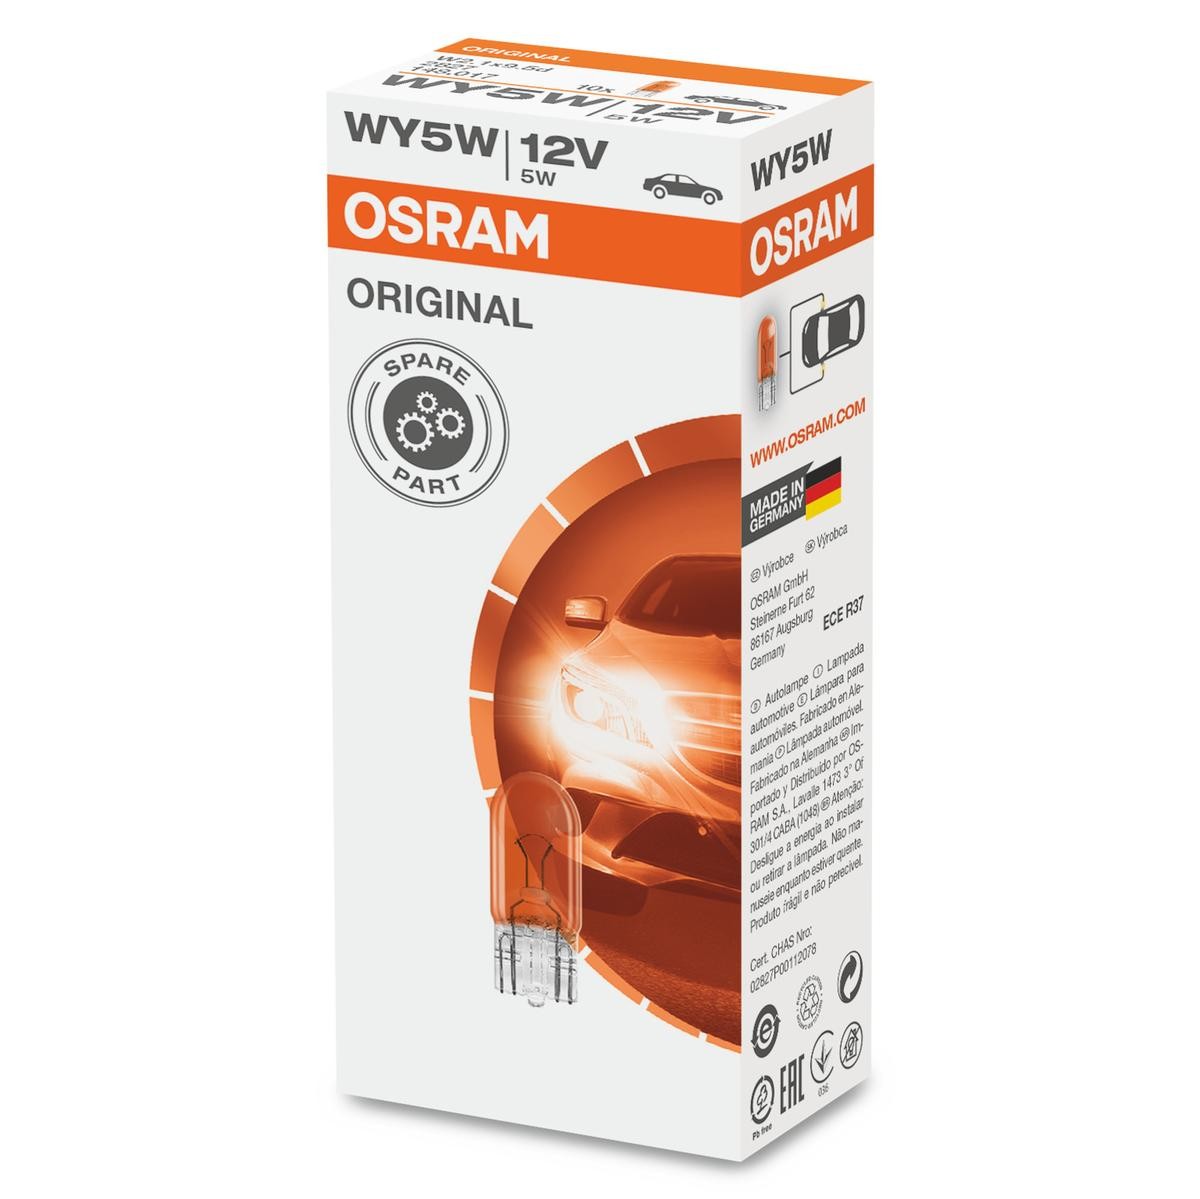 OSRAM 2827 ROVER Blinker-Lampe 12V 5W, WY5W